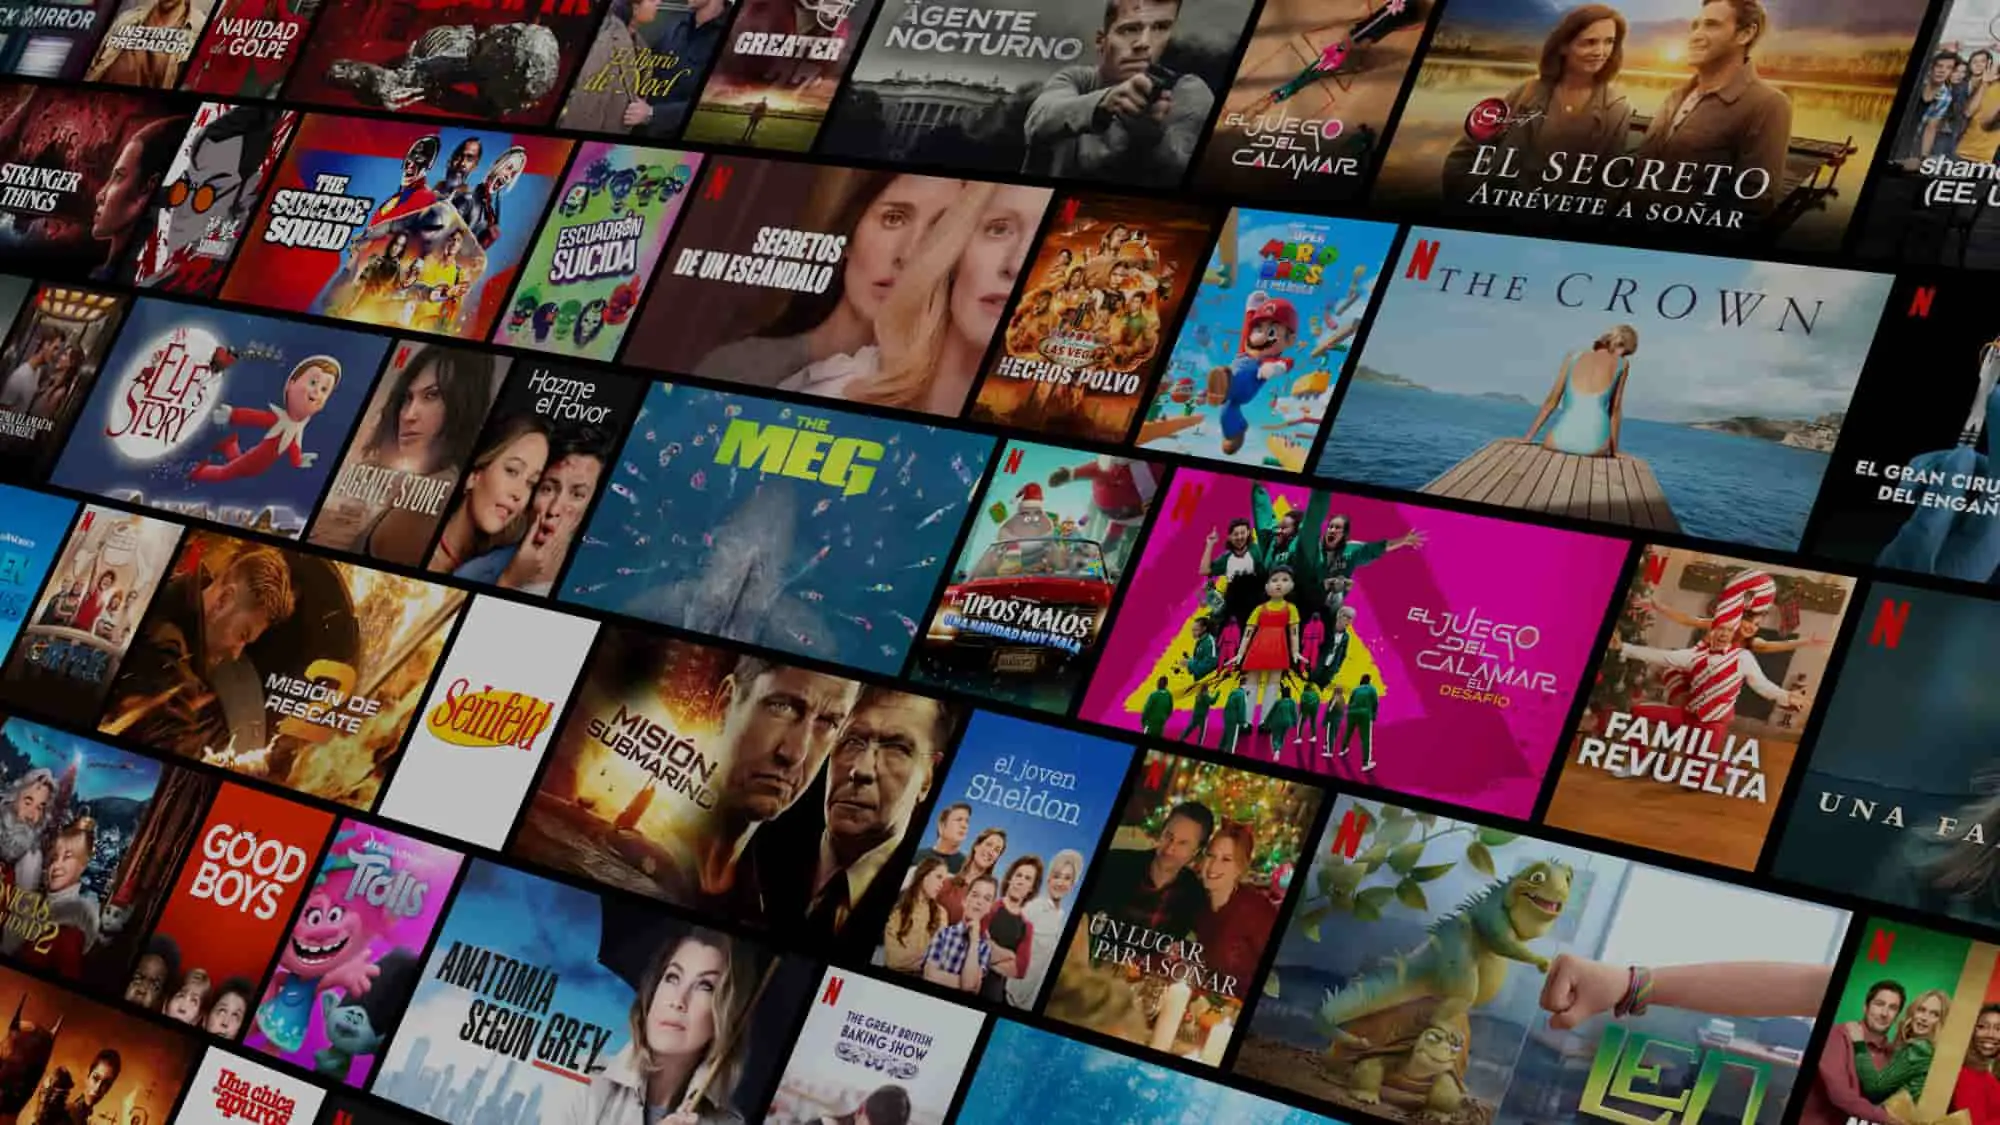 la modista película netflix - Cuál es la película que está de moda en Netflix